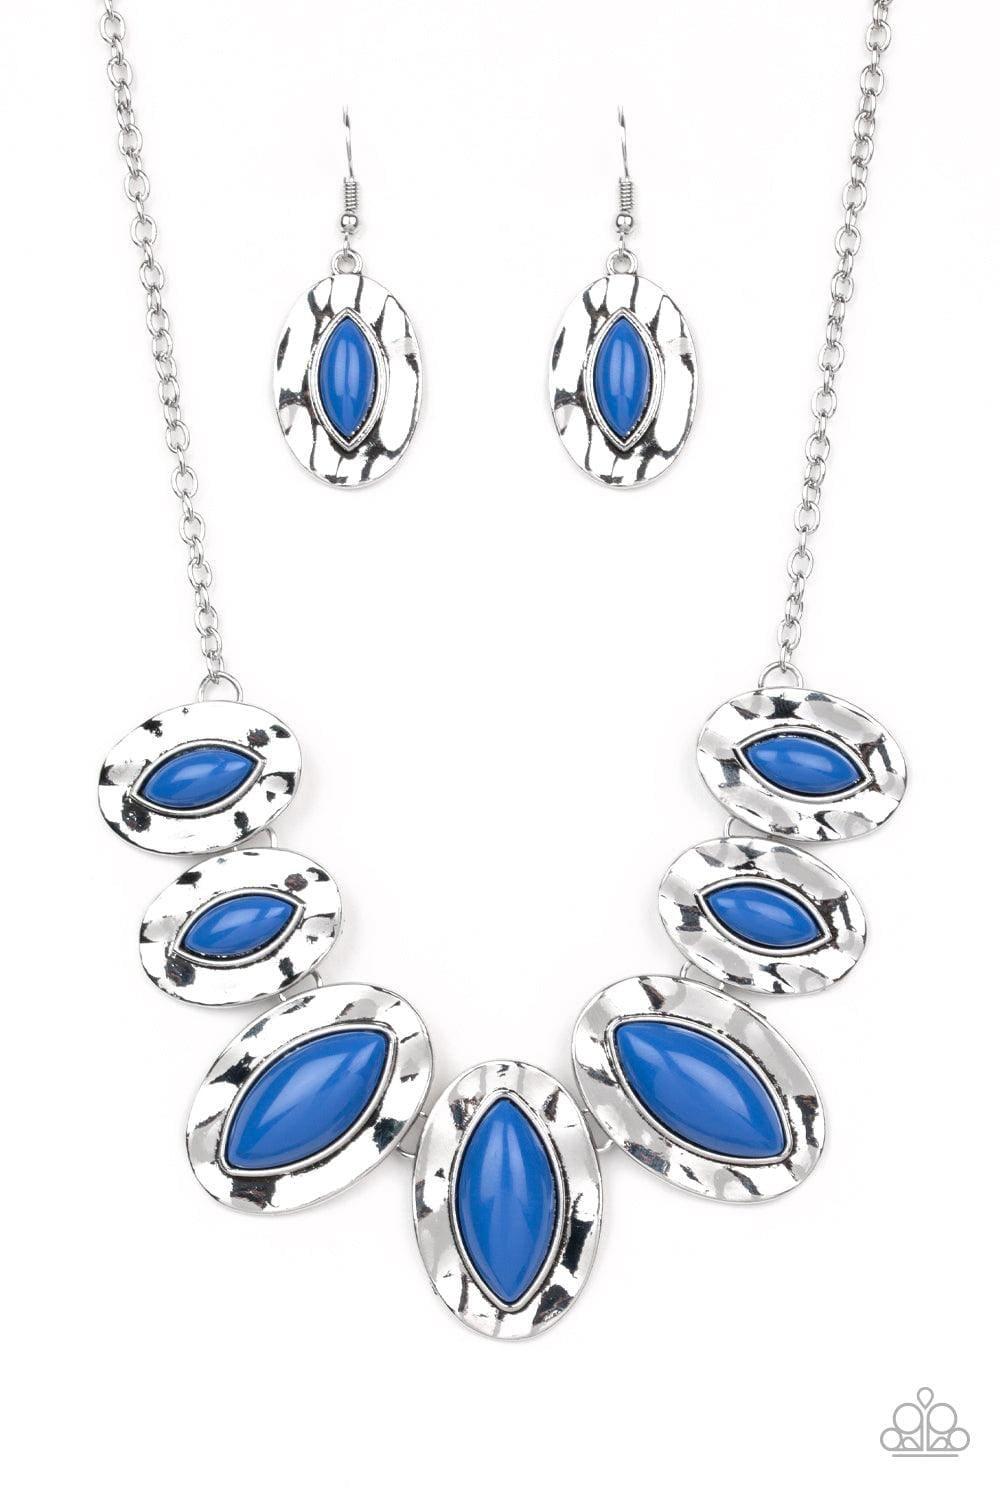 Paparazzi Accessories - Terra Color - Blue Necklace - Bling by JessieK